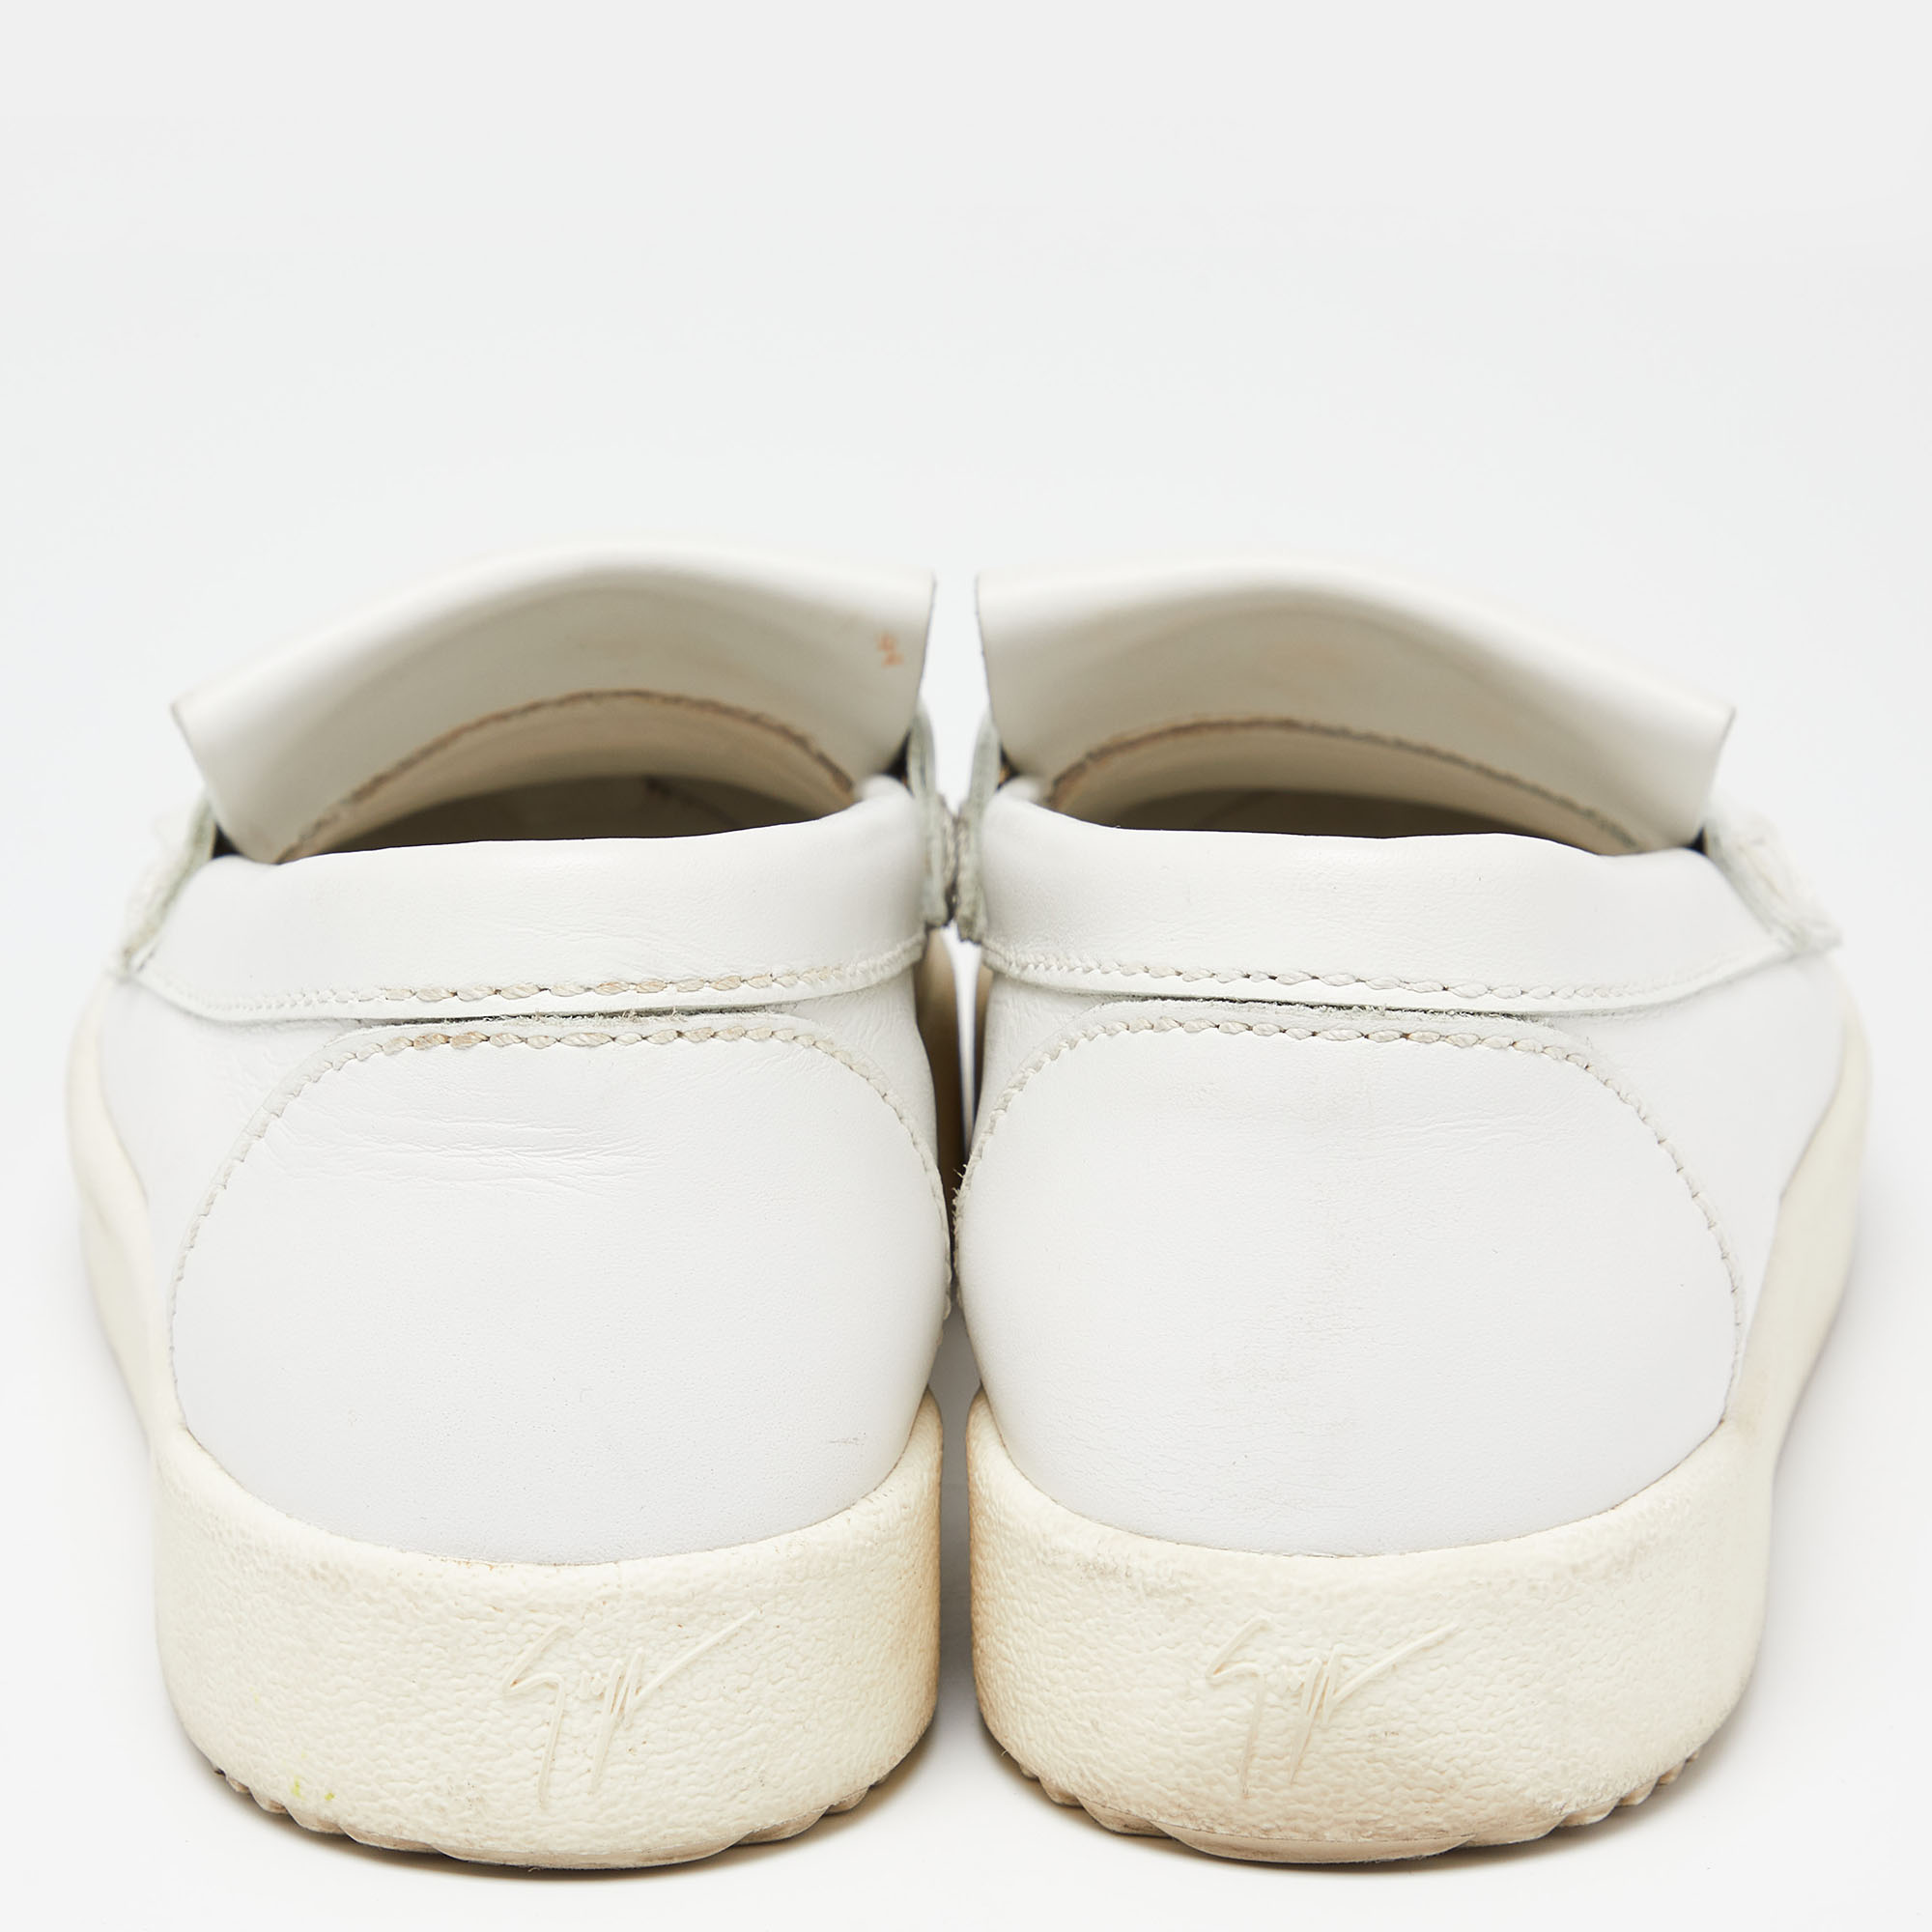 Giuseppe Zanotti White Leather Fringed Slip On Sneakers Size 37.5